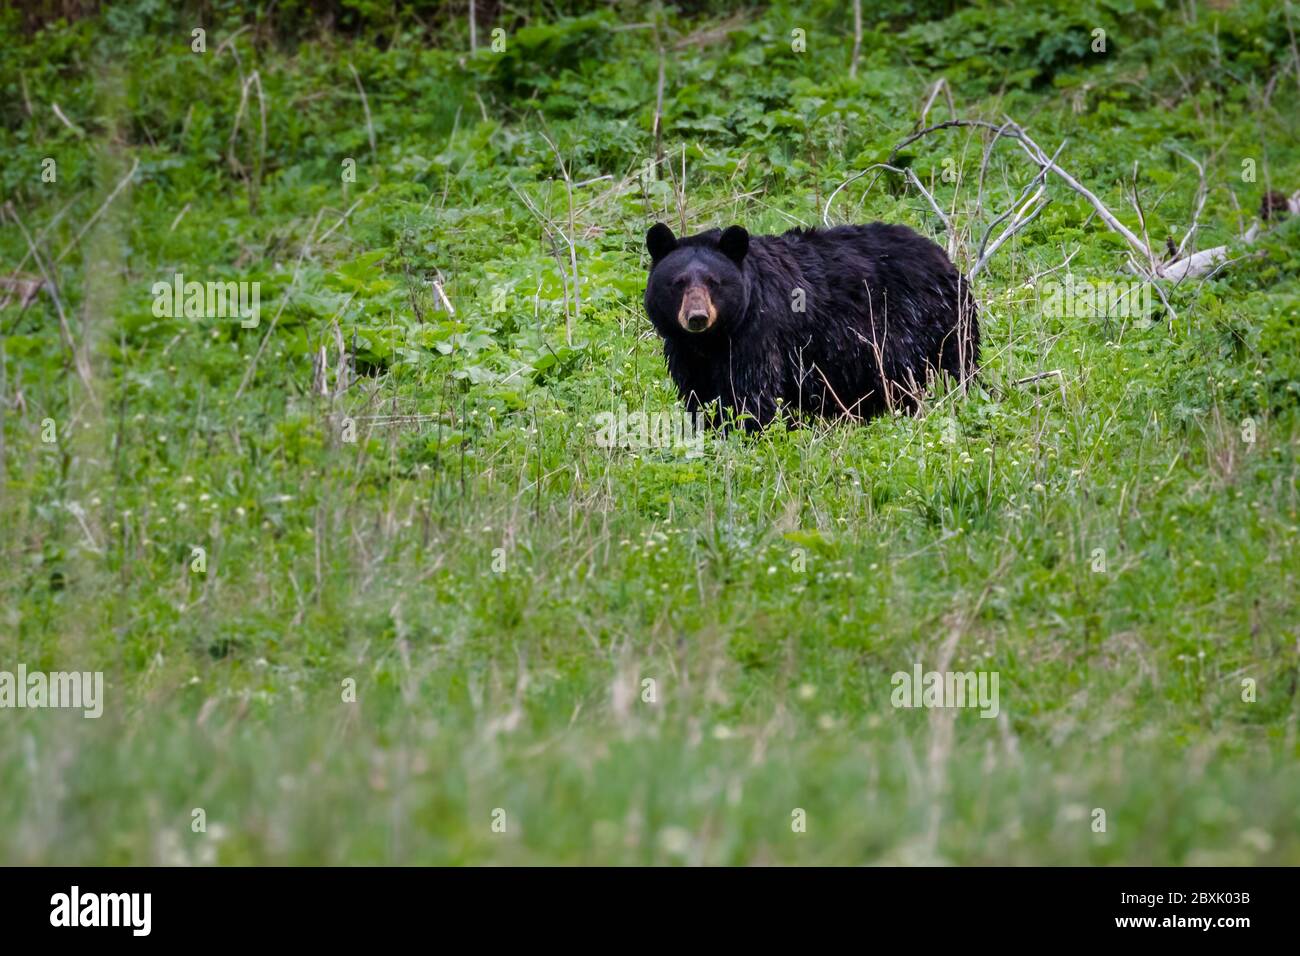 Black bear foraging grass, Yellowstone National Park, WY Stock Photo